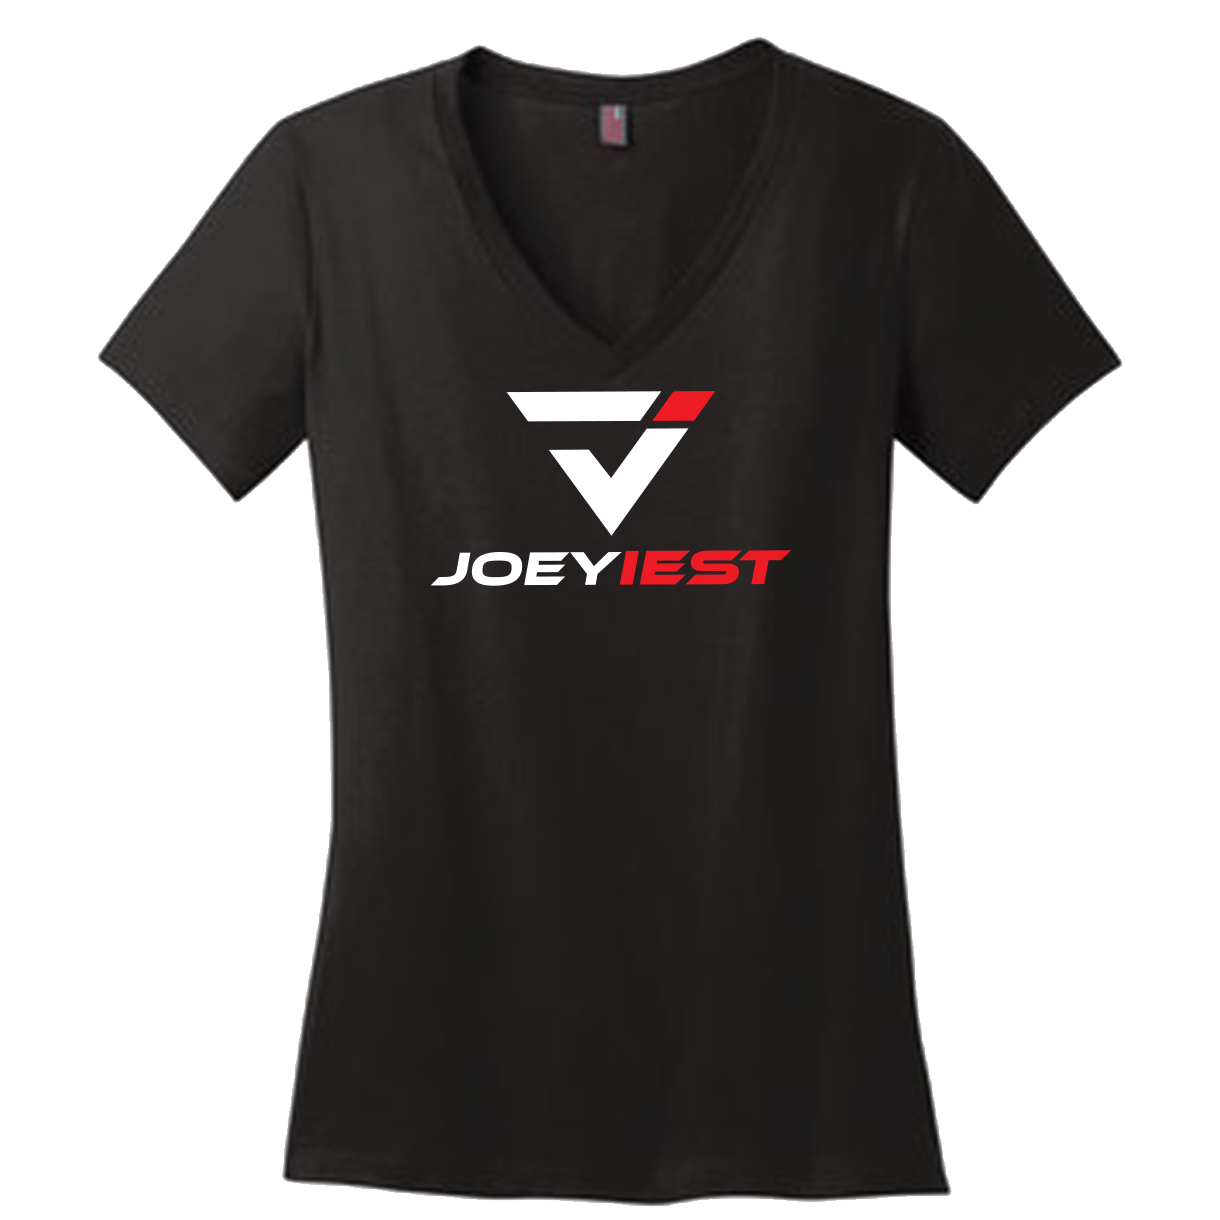 Joey Iest Logo Ladies V-Neck T-Shirt